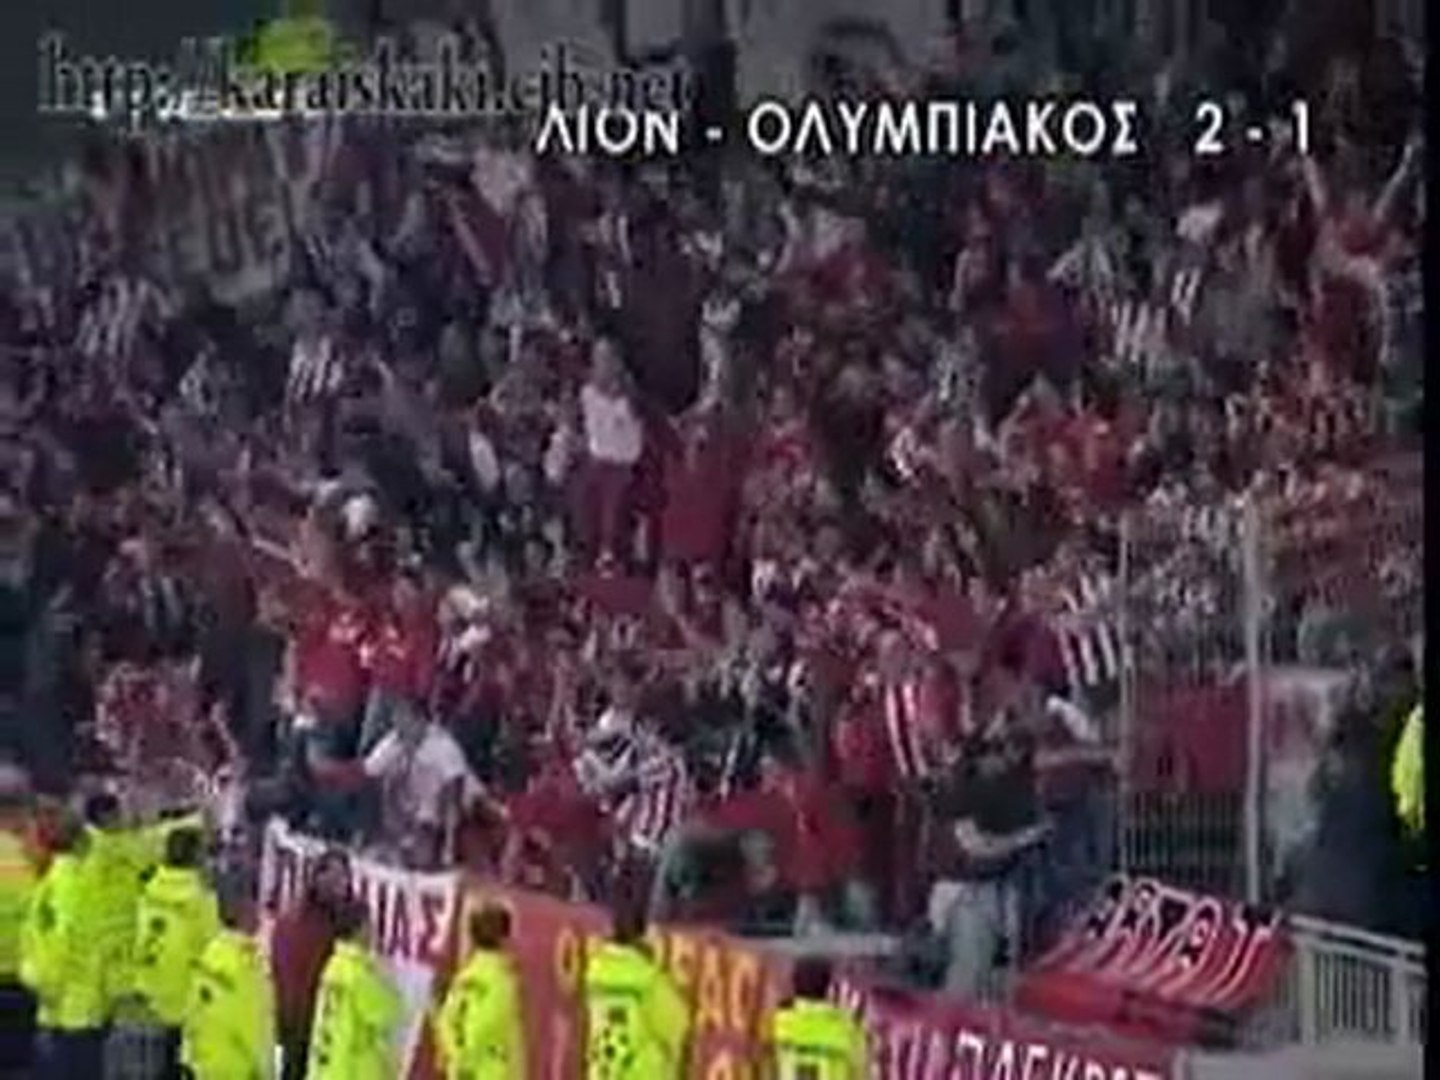 Lyon-Olympiakos 2-1 kafes - video Dailymotion